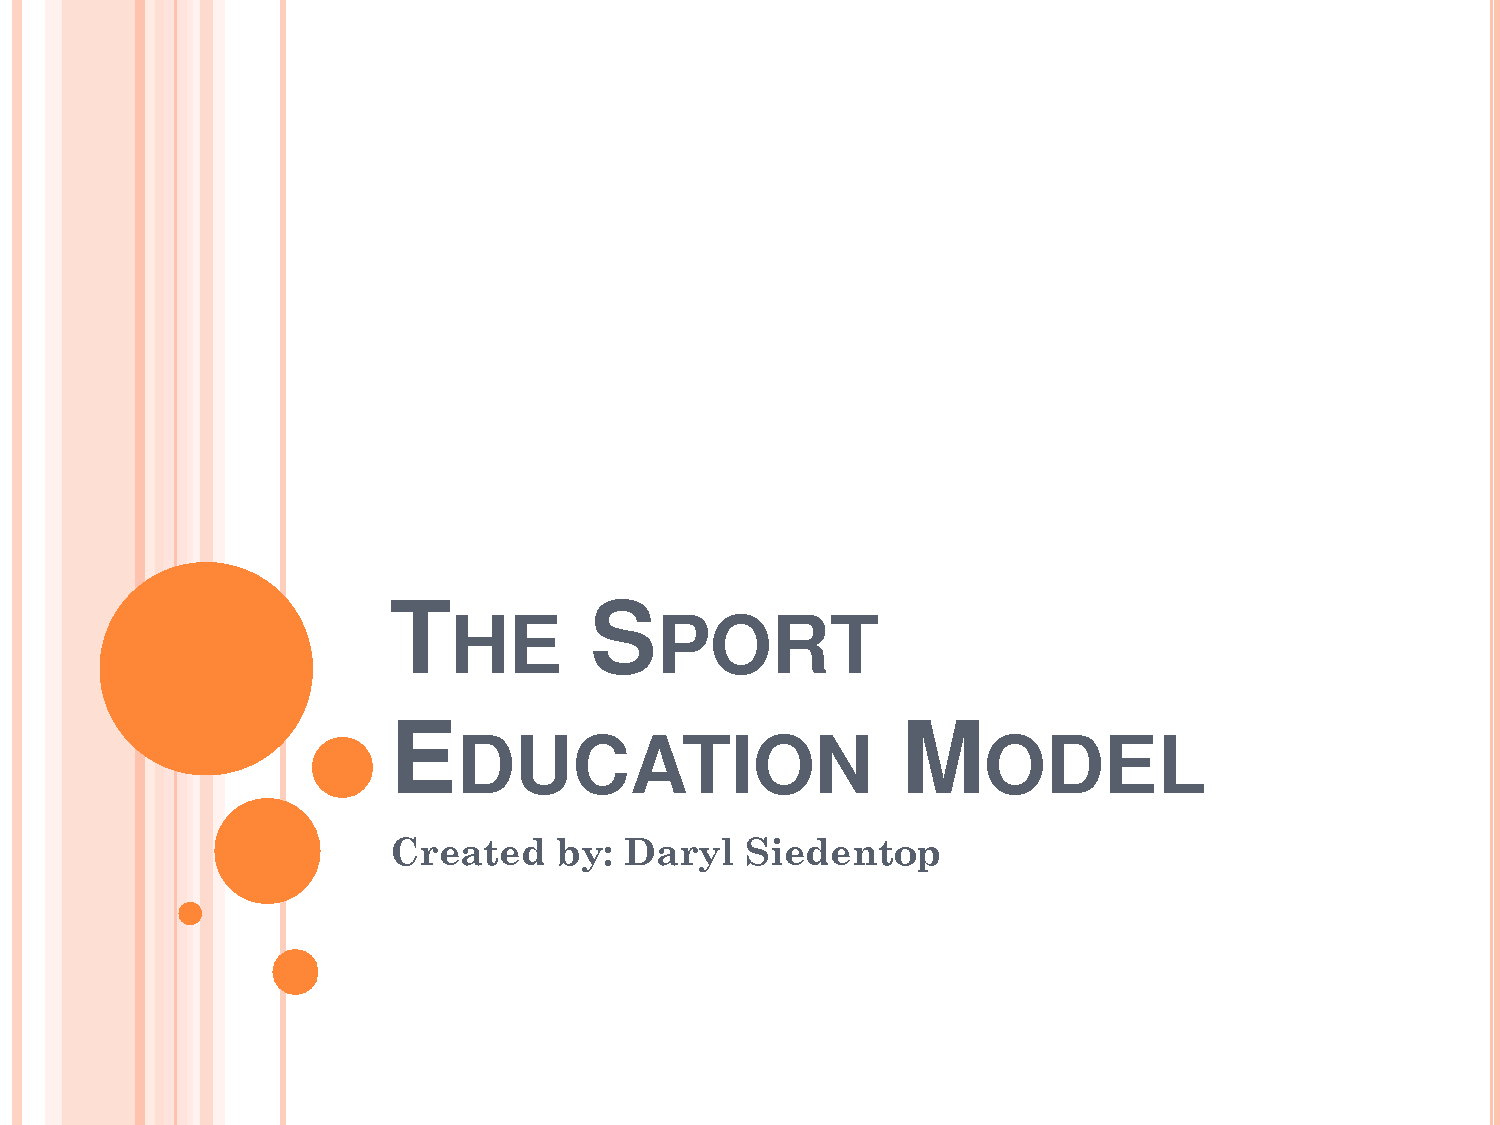 Sport Education